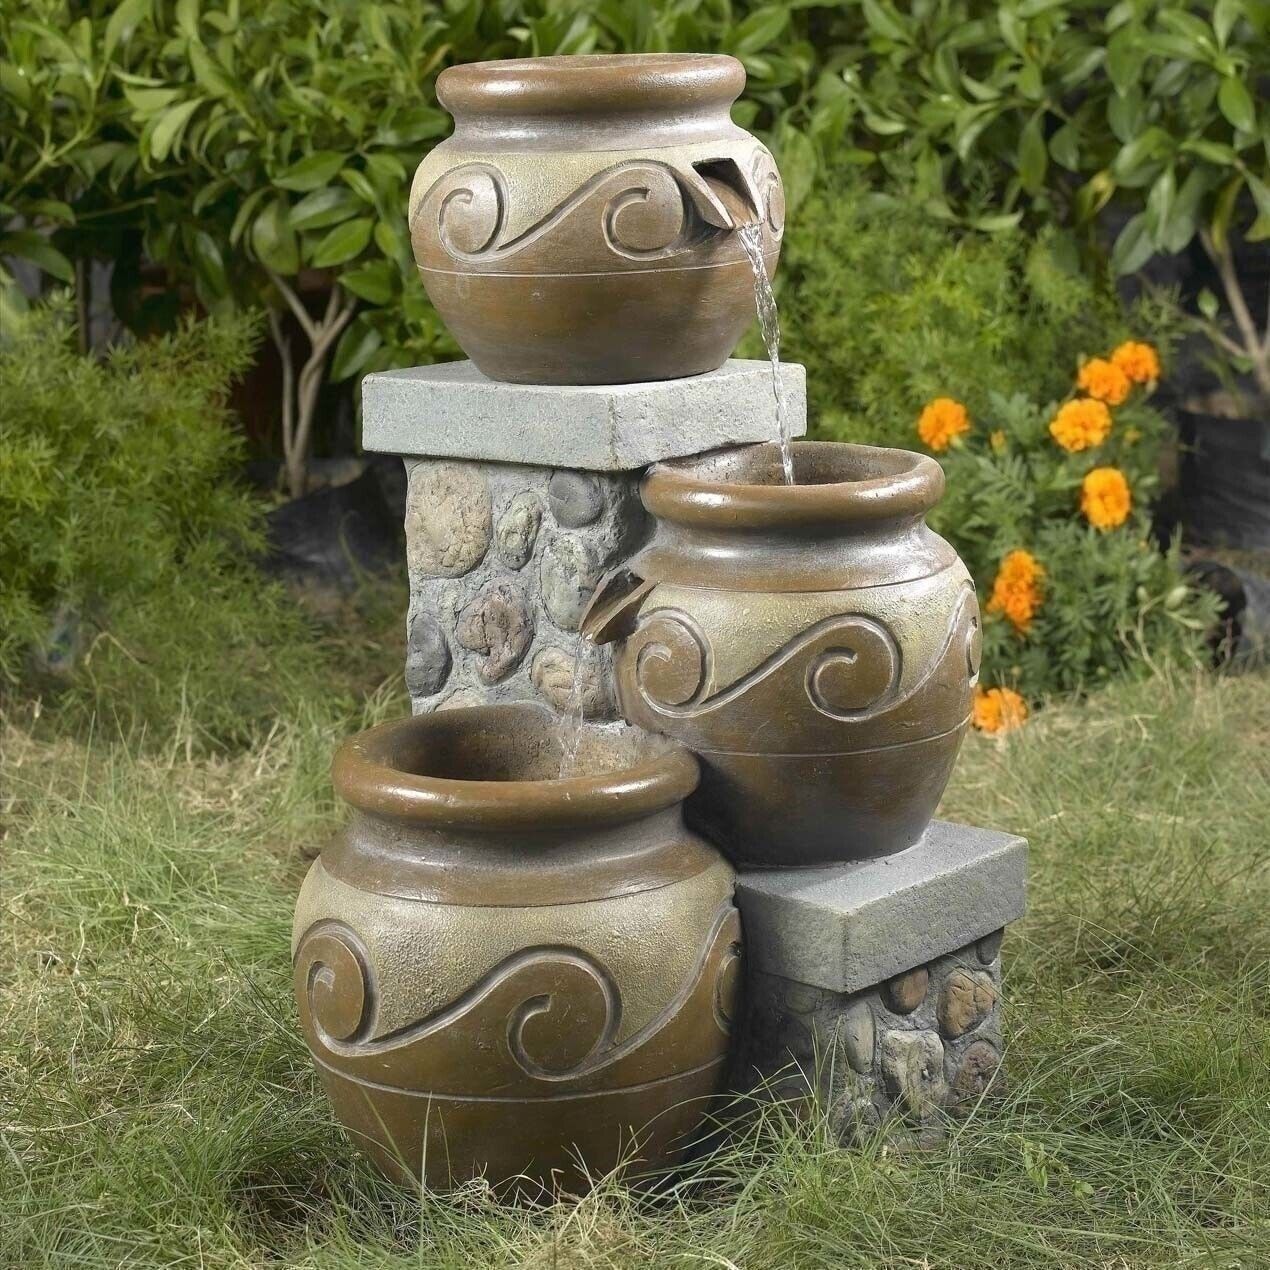 &nbsp; 3 Tier Pots Jugs Outdoor Water Fountain WITH PUMP Garden Patio Decor Stone Wall